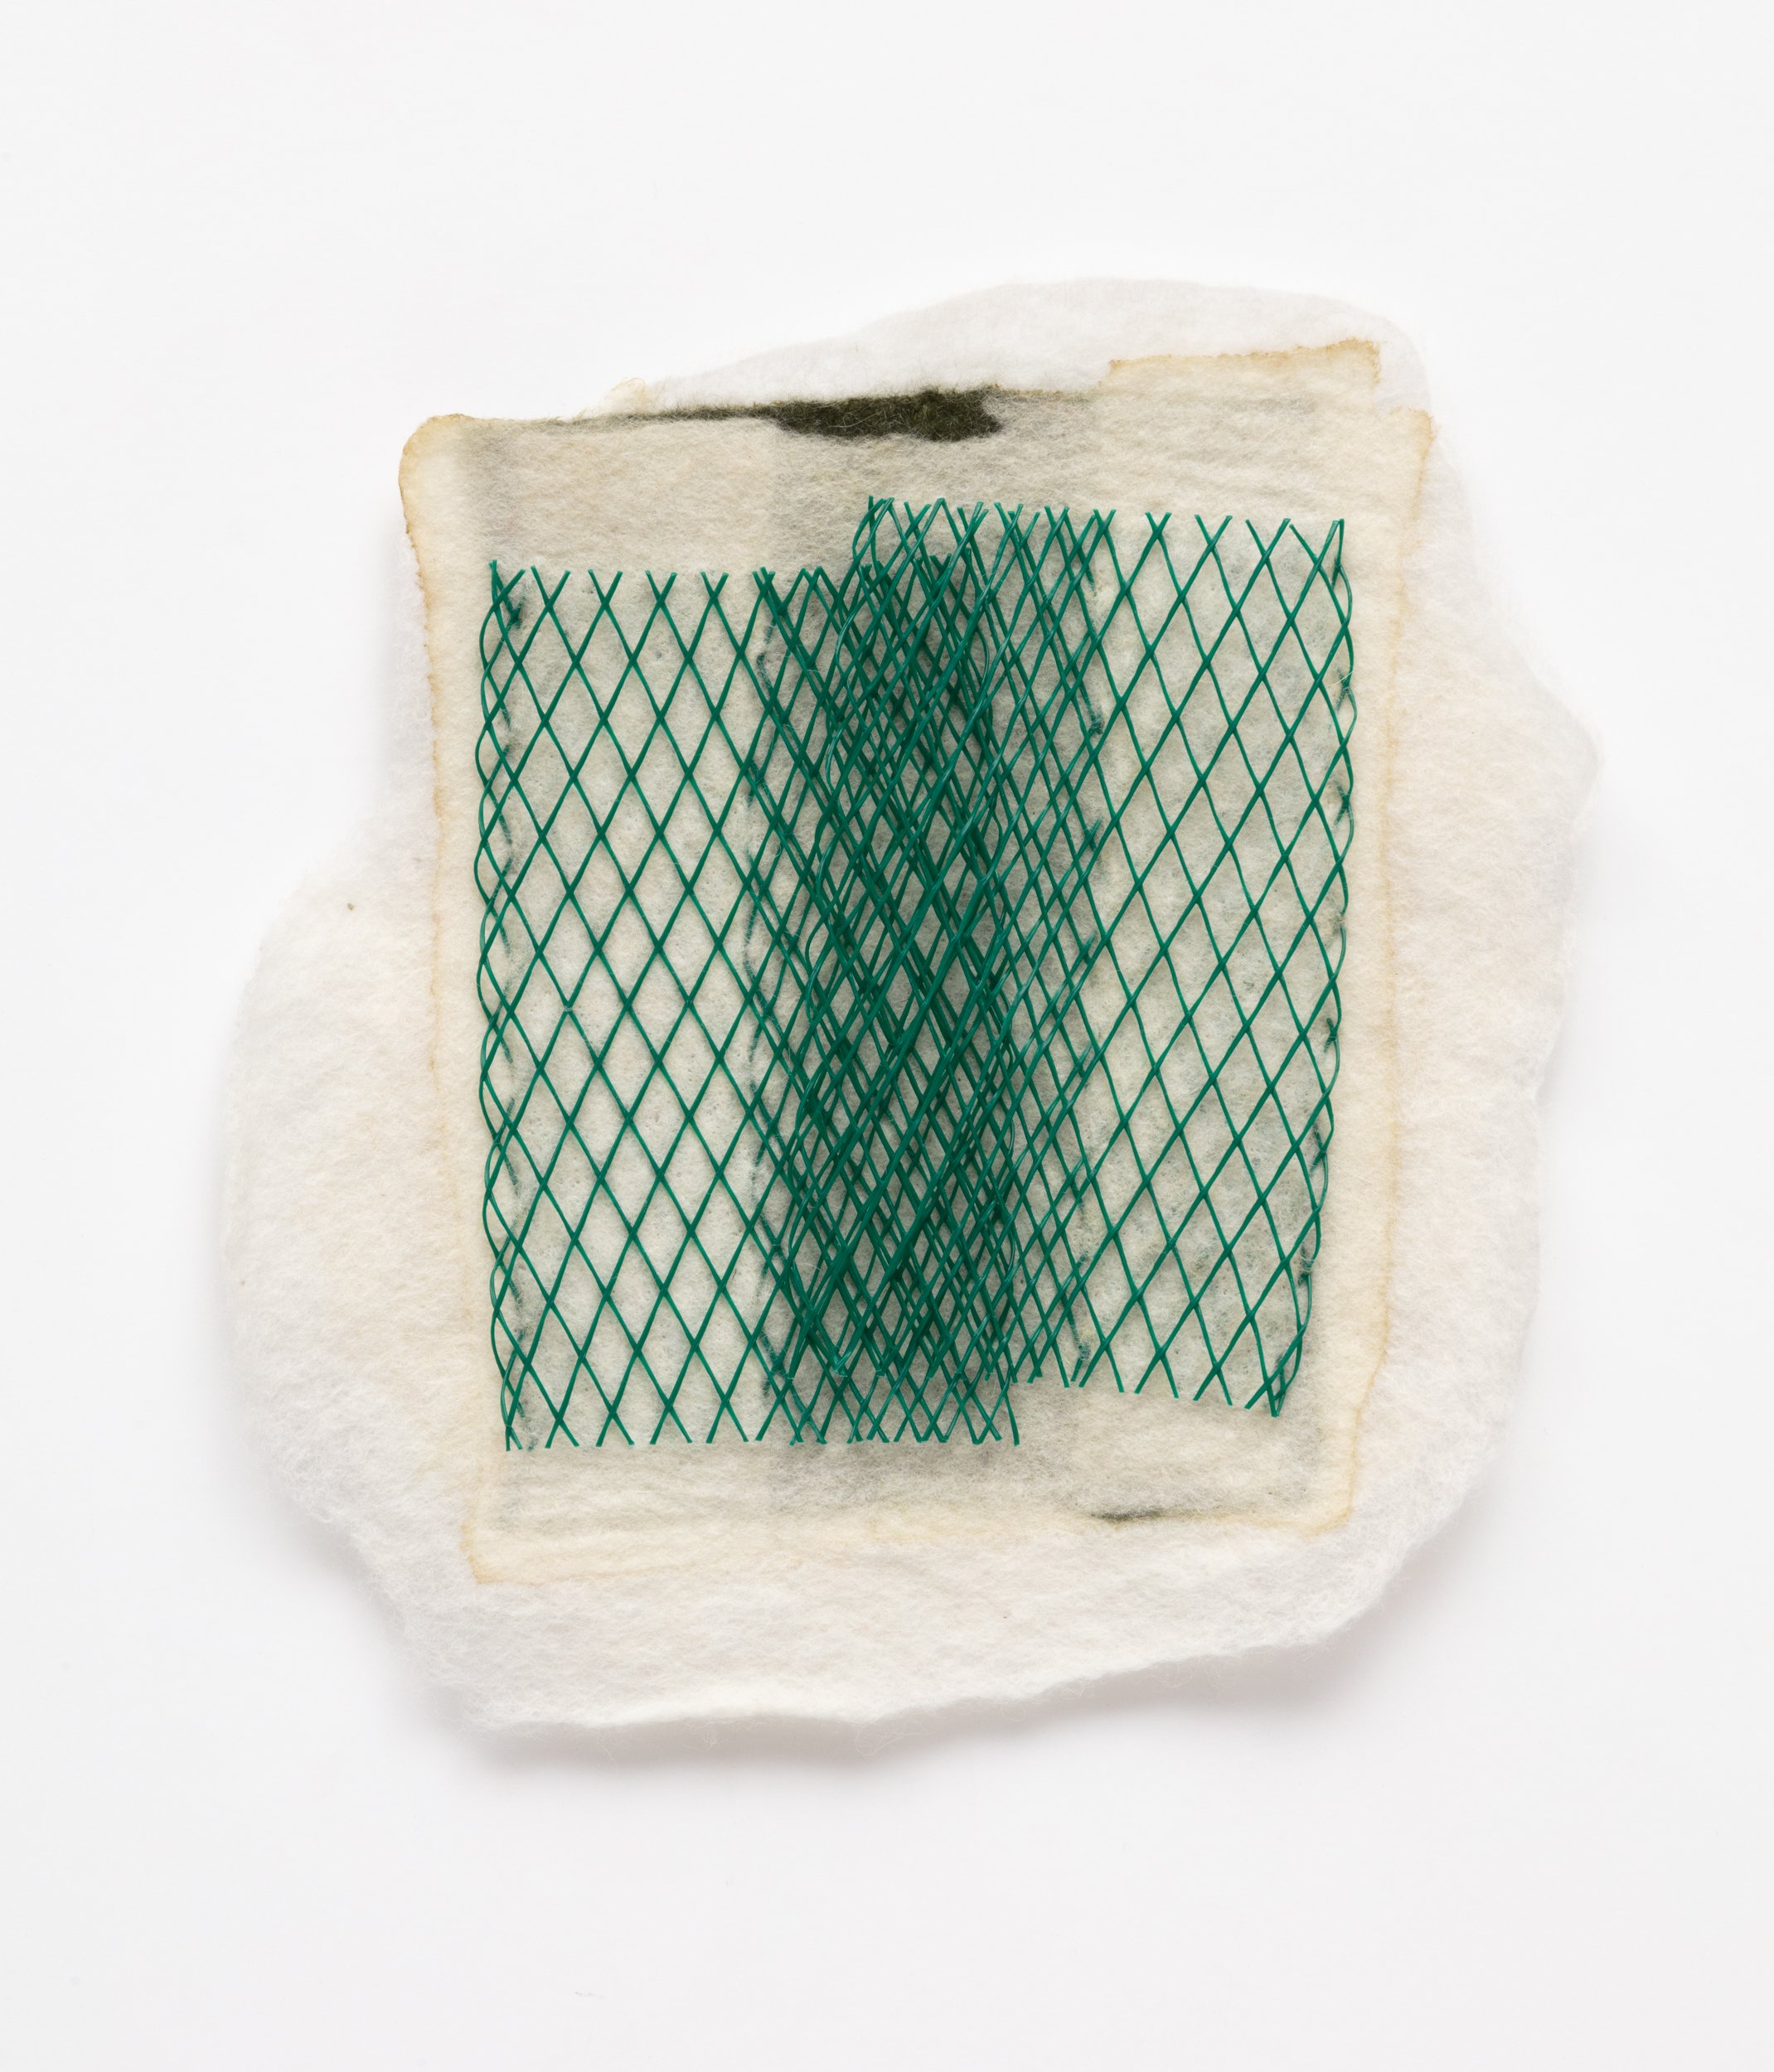  Untitled, 2023  Handfelted merino wool, plastic net packaging 